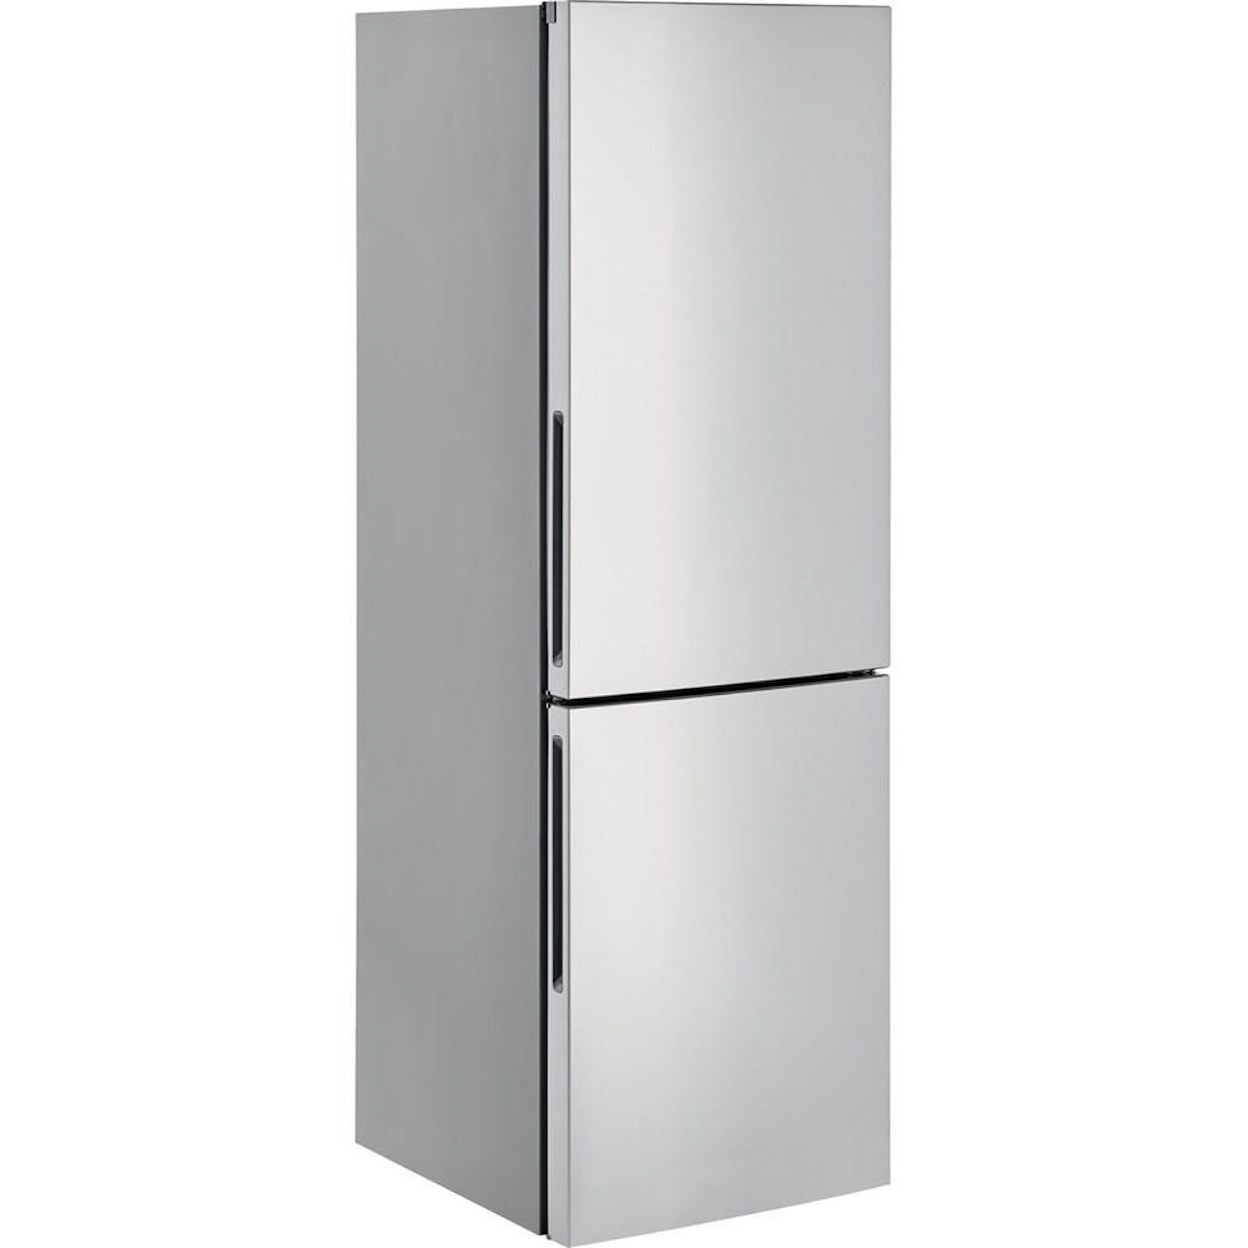 Electrolux Bottom-Freezer Refrigerator 11.8 Cu. Ft. Bottom Freezer Refrigerator